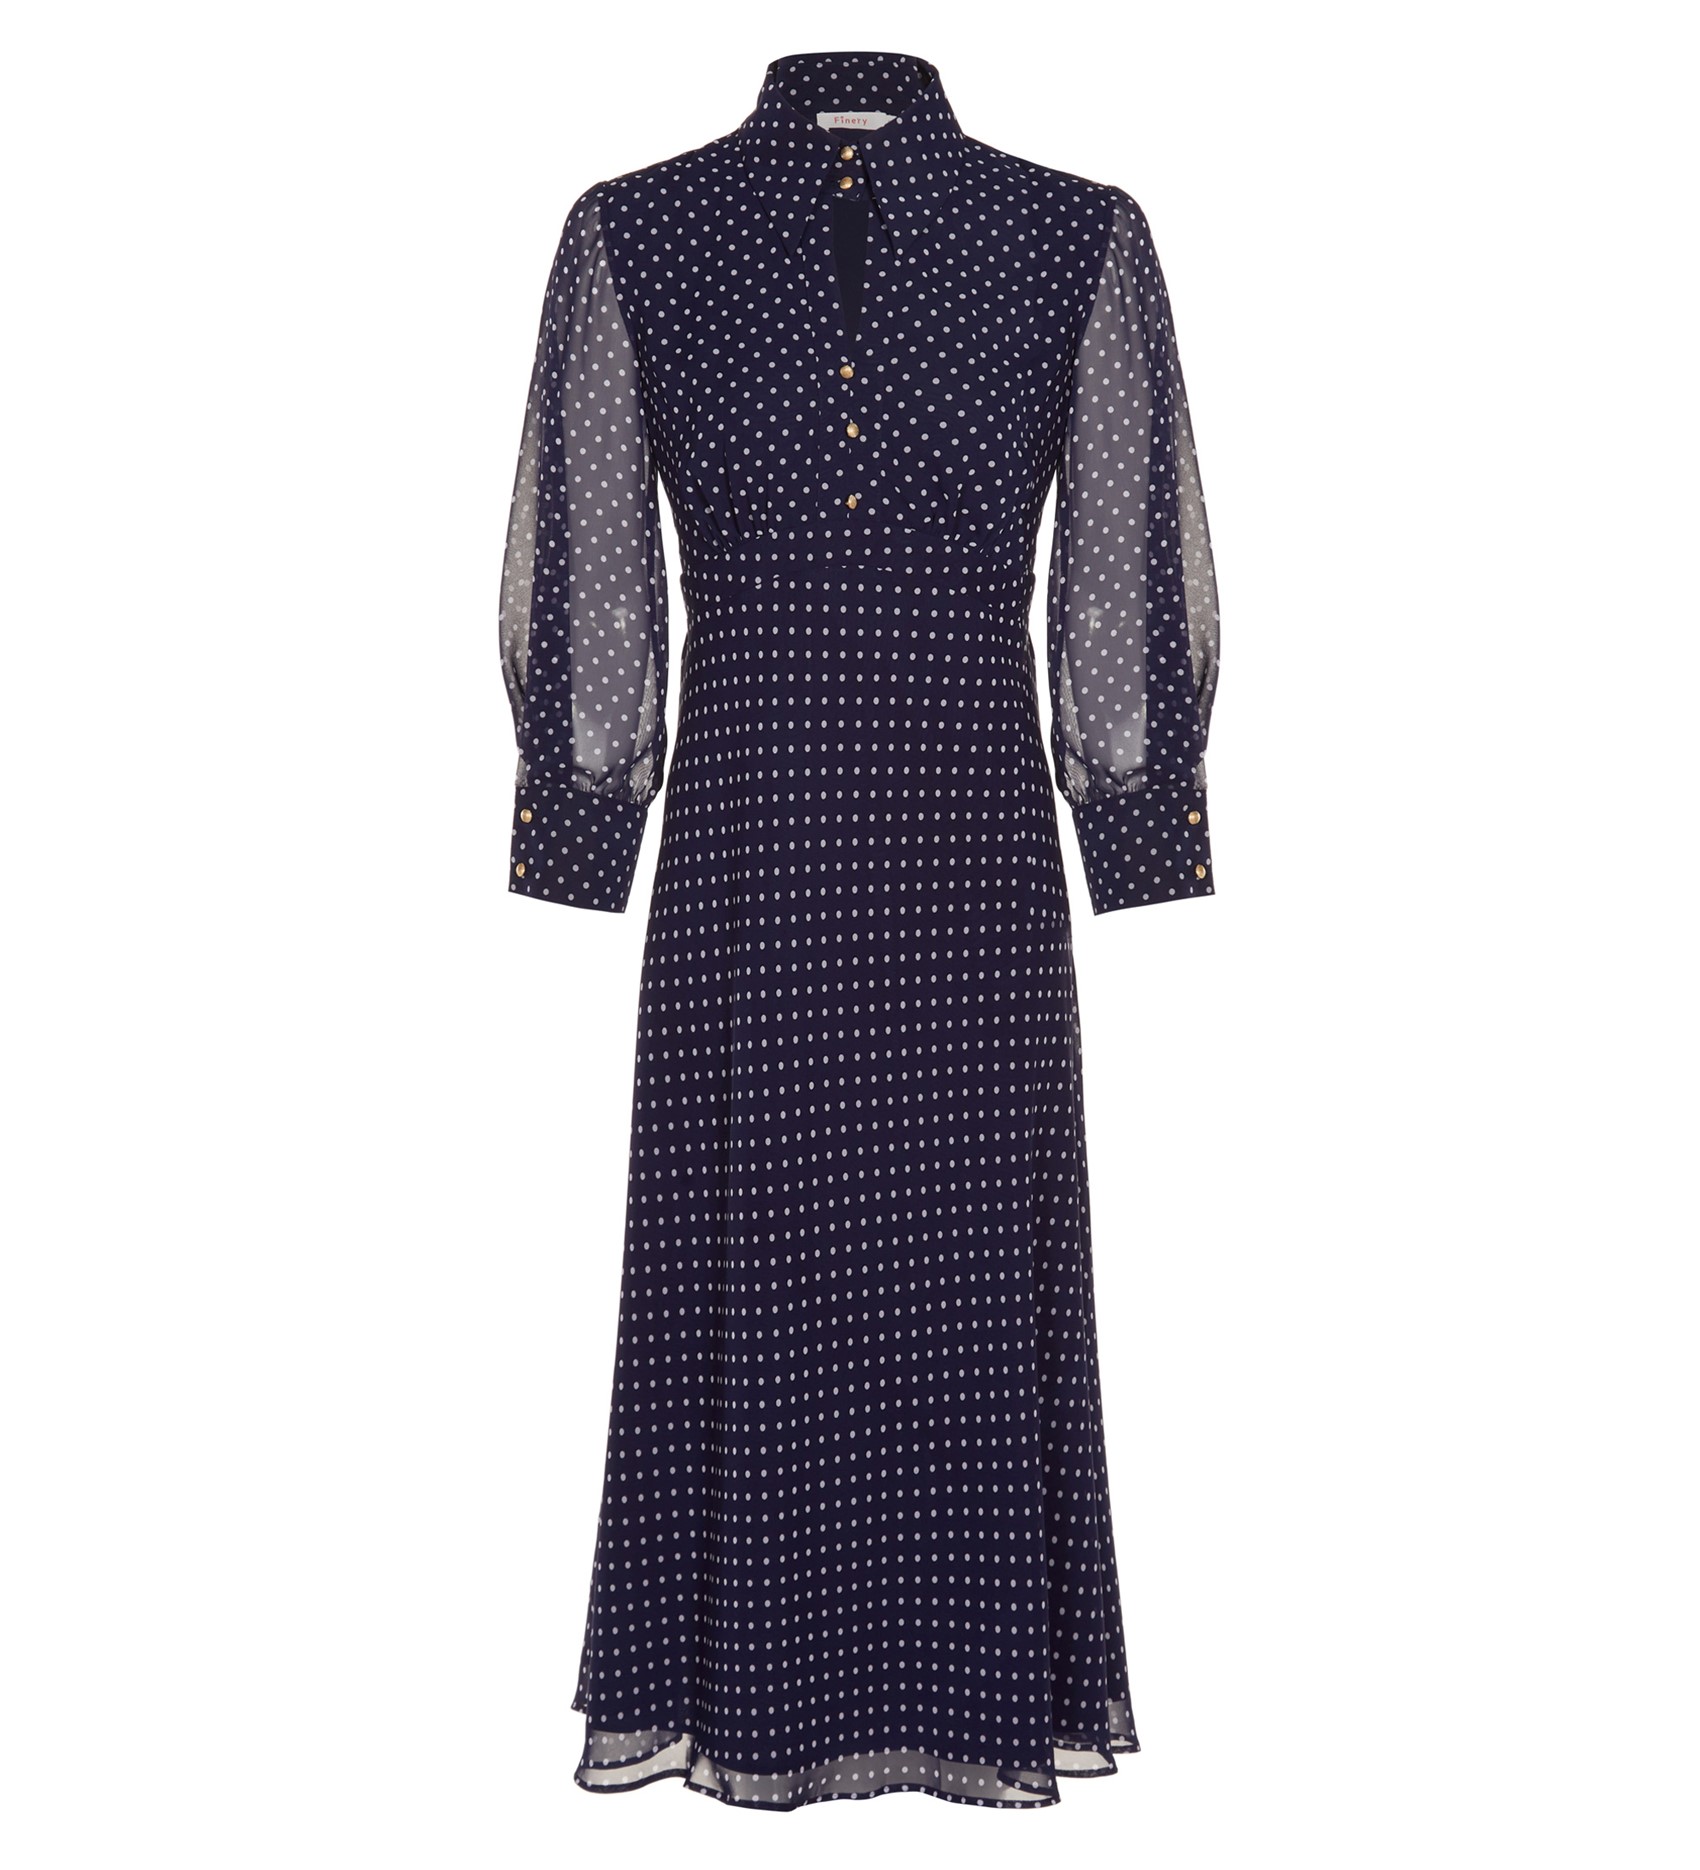 Midi Navy Spot Dress | Long Sleeves | Finery London